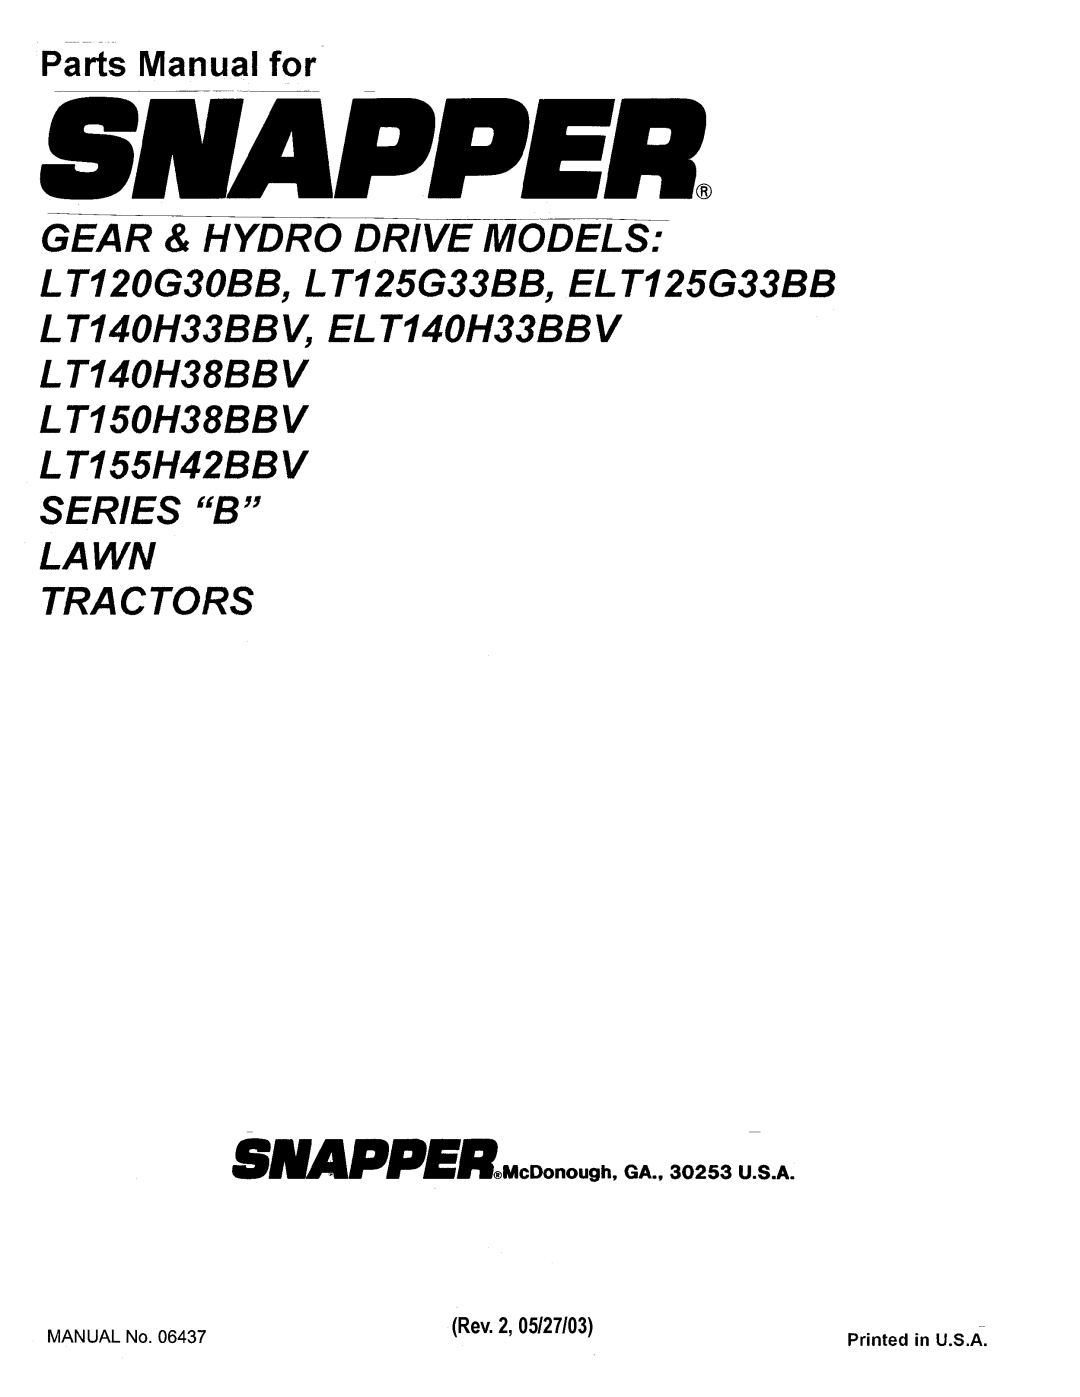 Snapper LT120G30BB, ELT125G33BB, ELT140H33BBV, LT150H38BBV, LT155H42BBV, LT140H38BBV manual 